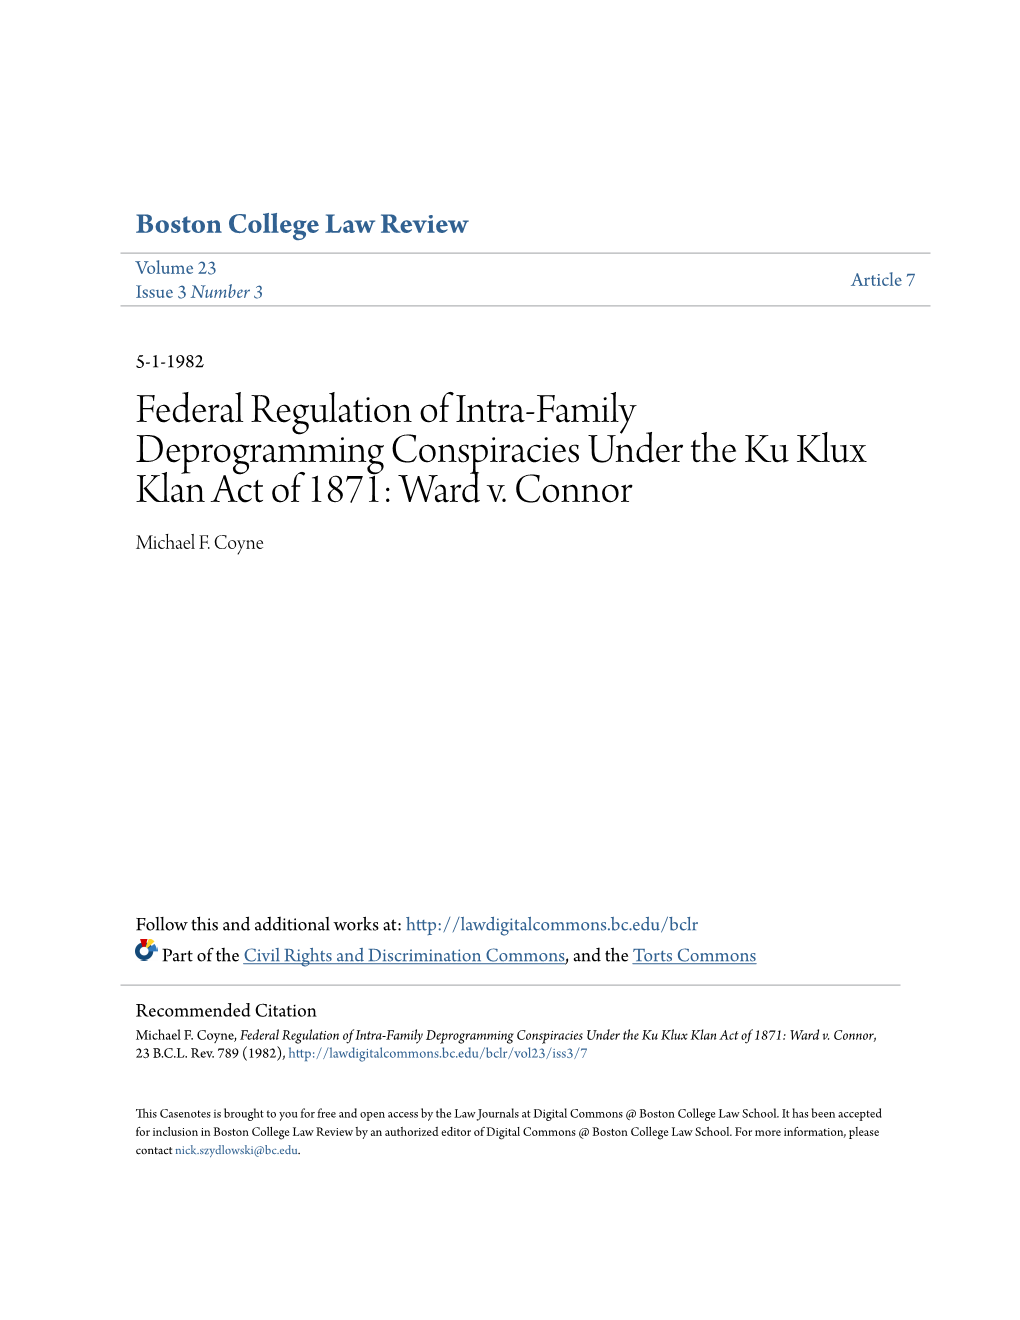 Federal Regulation of Intra-Family Deprogramming Conspiracies Under the Ku Klux Klan Act of 1871: Ward V